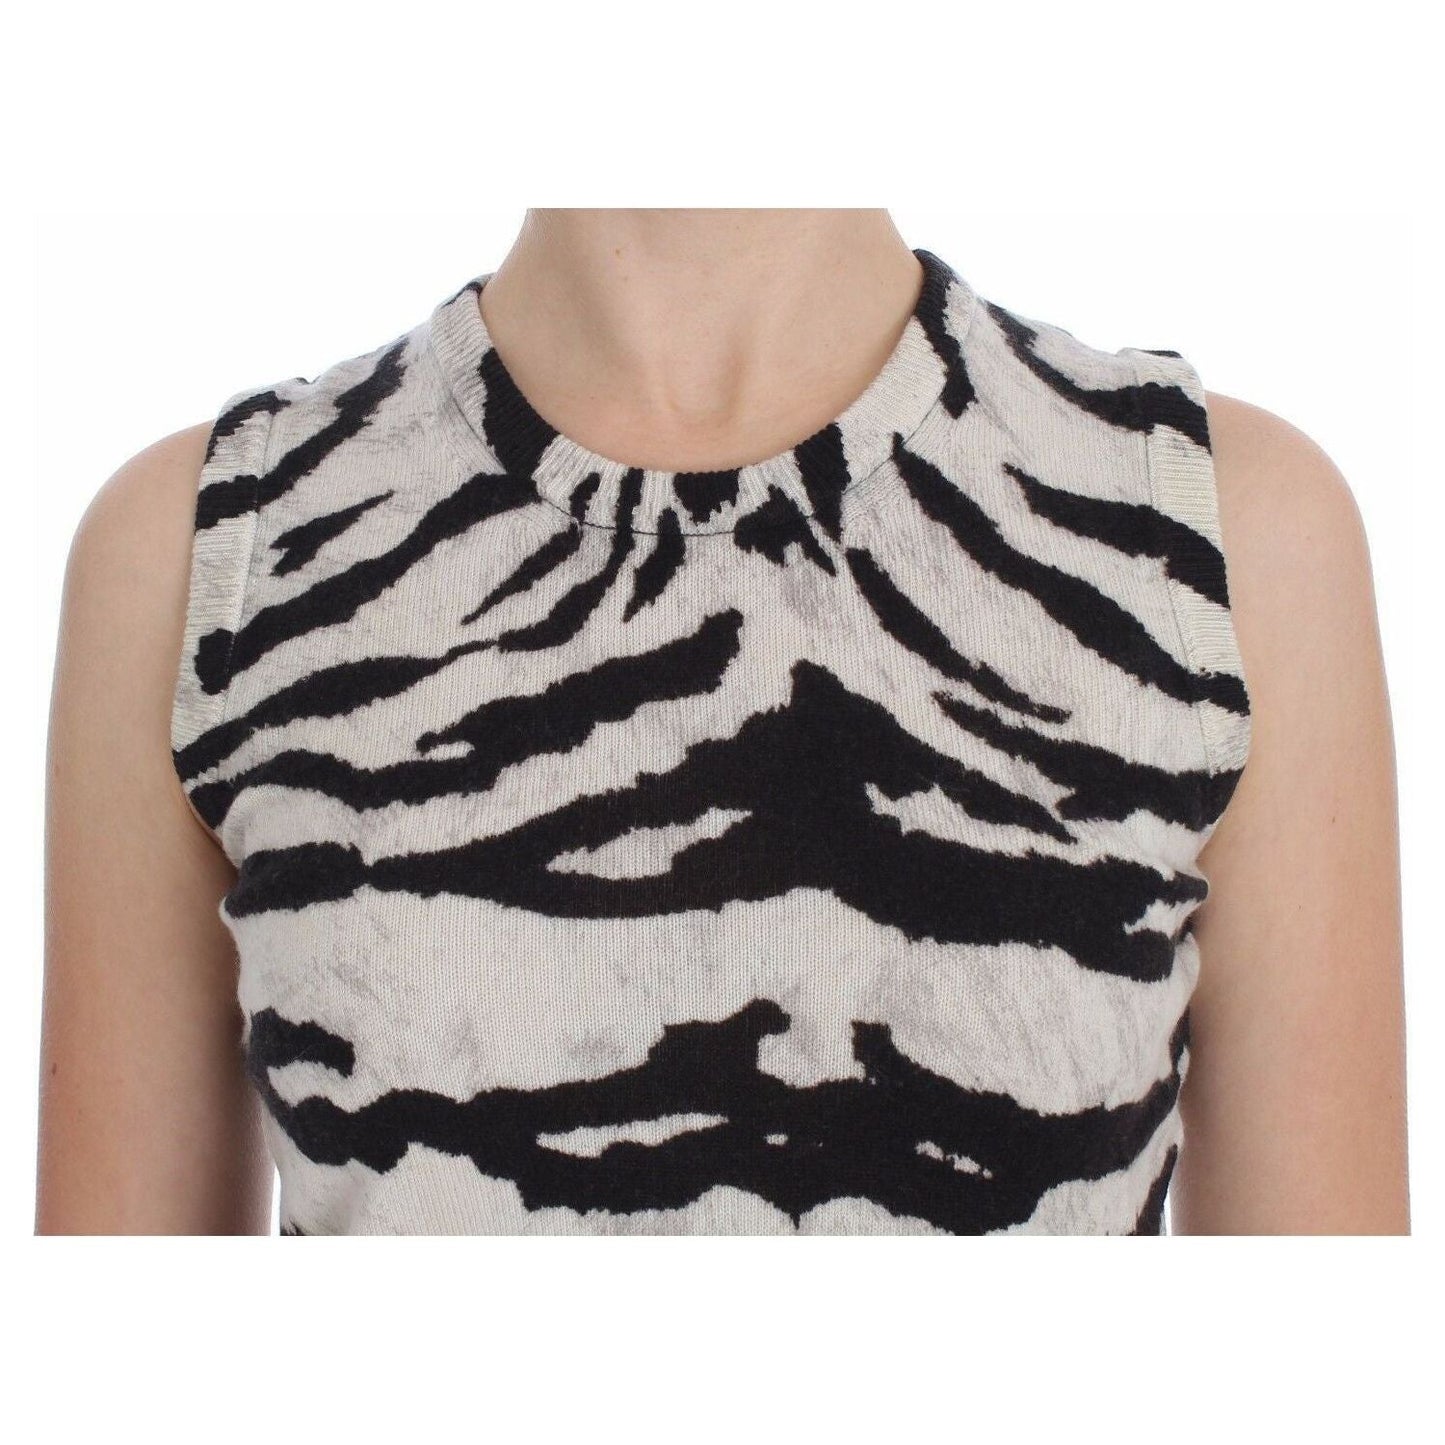 Dolce & Gabbana Zebra Print Cashmere Sleeveless Top zebra-100-cashmere-knit-top-vest-tank-top